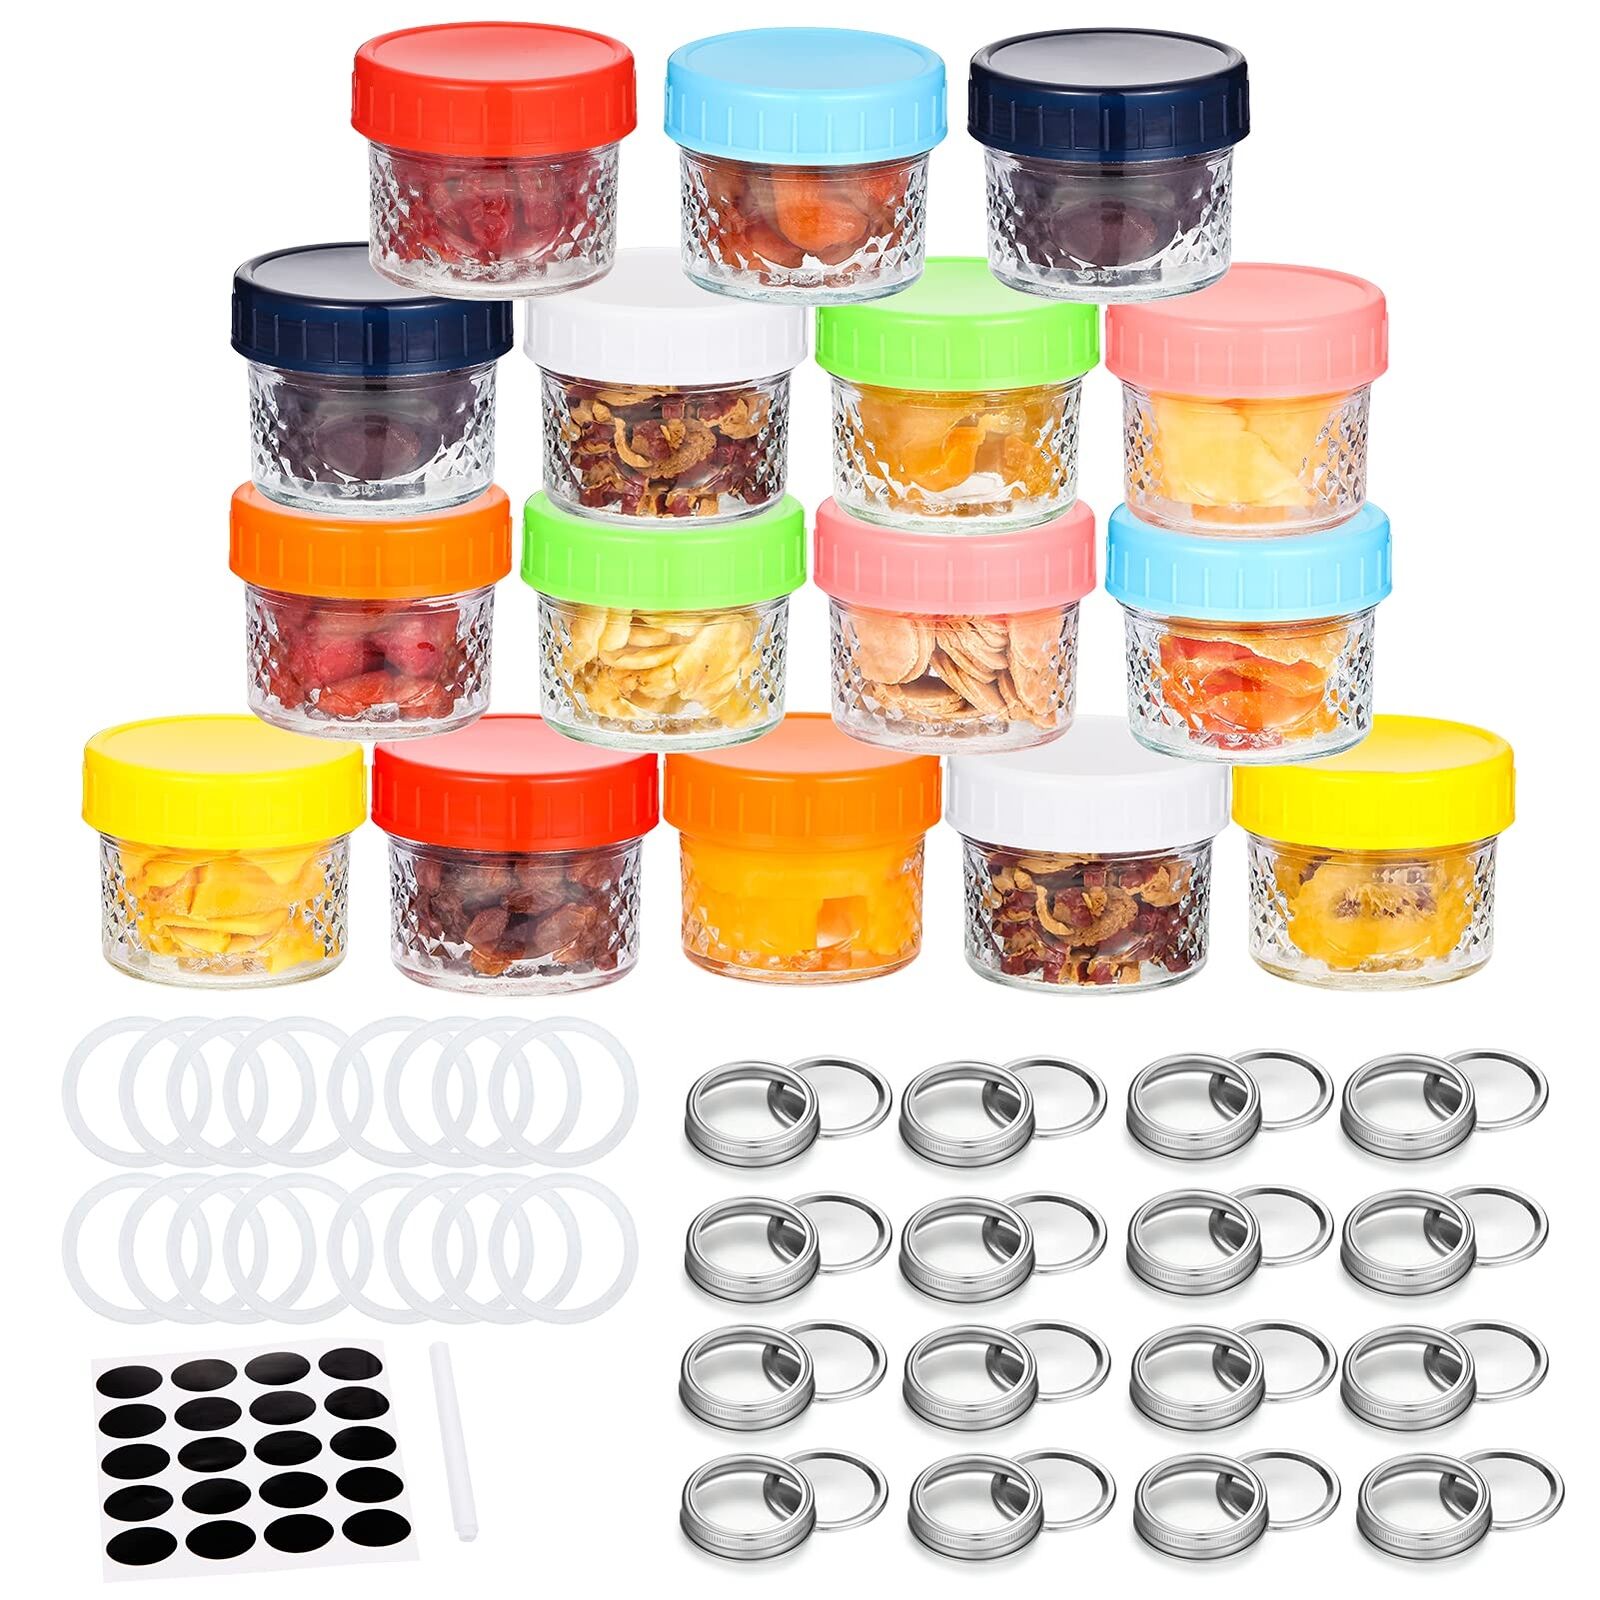 Mini Mason Jars 4 oz - Pack of 16, small glass jars with lids and sealing ban...